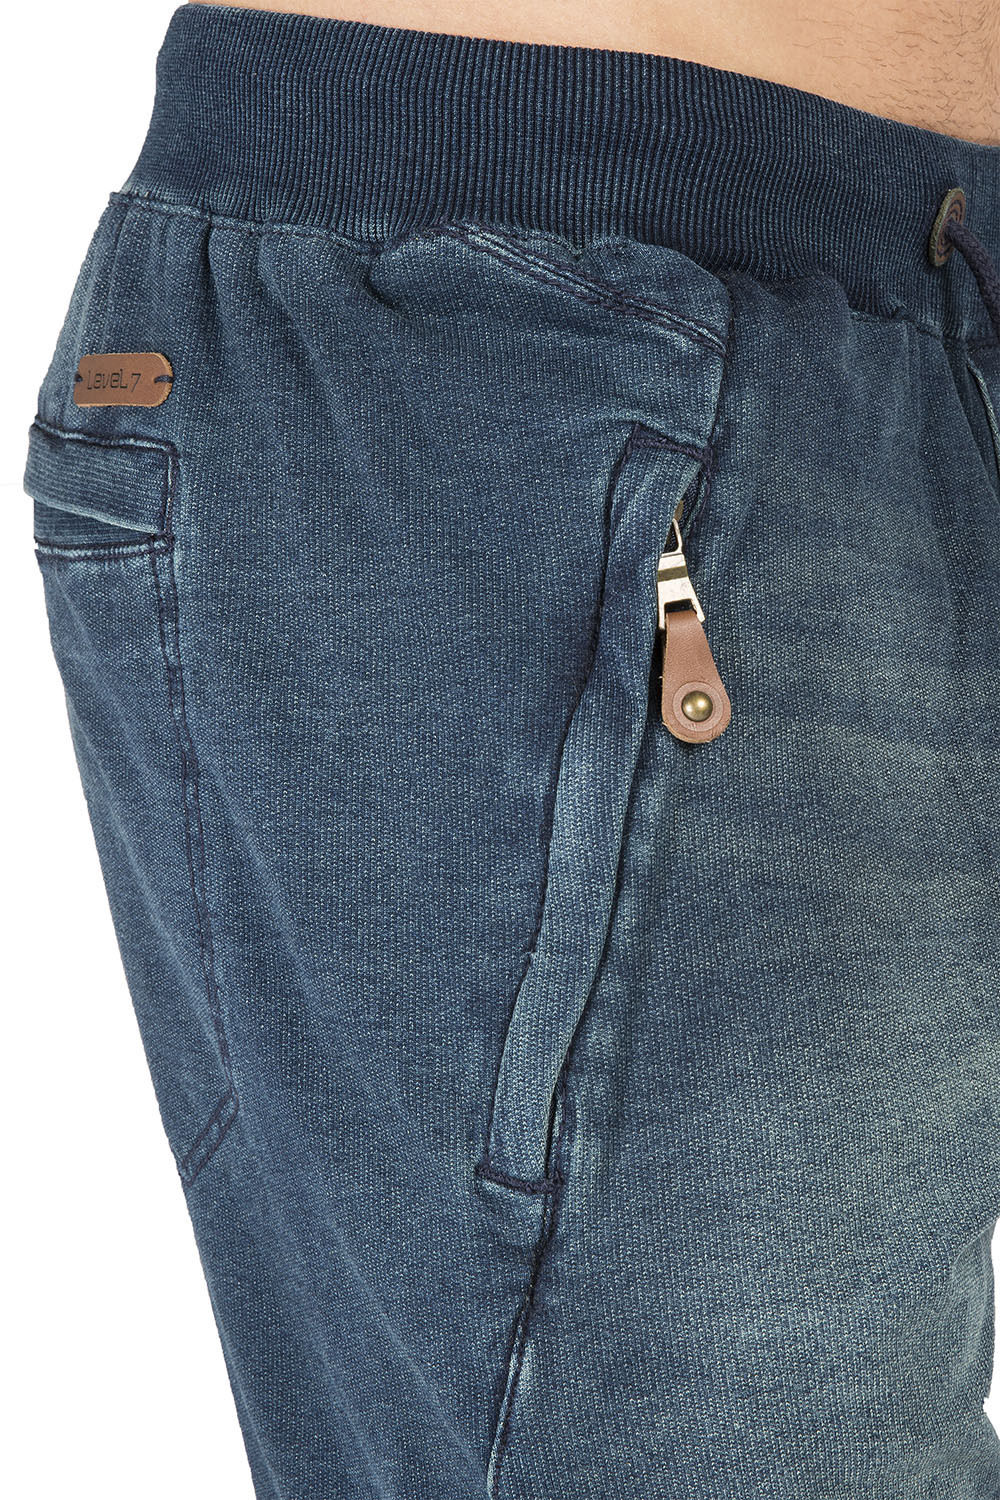 Drop Crotch Premium Knit Denim Jogger Jeans Whisker Zipper Pockets